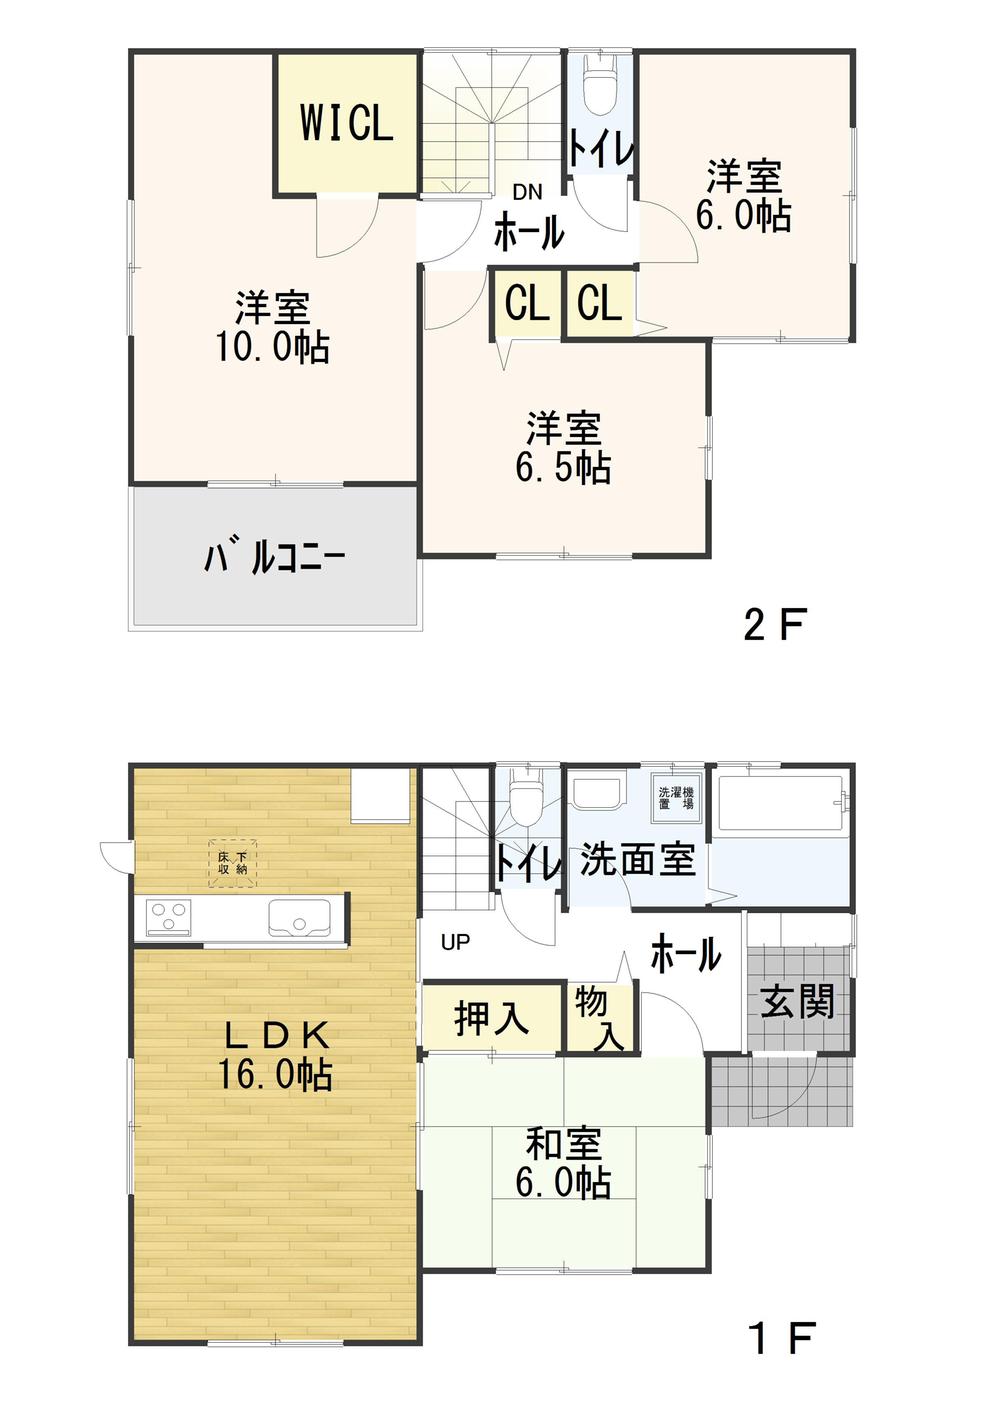 Floor plan. (6 Building), Price 15.8 million yen, 4LDK, Land area 213.4 sq m , Building area 105.99 sq m